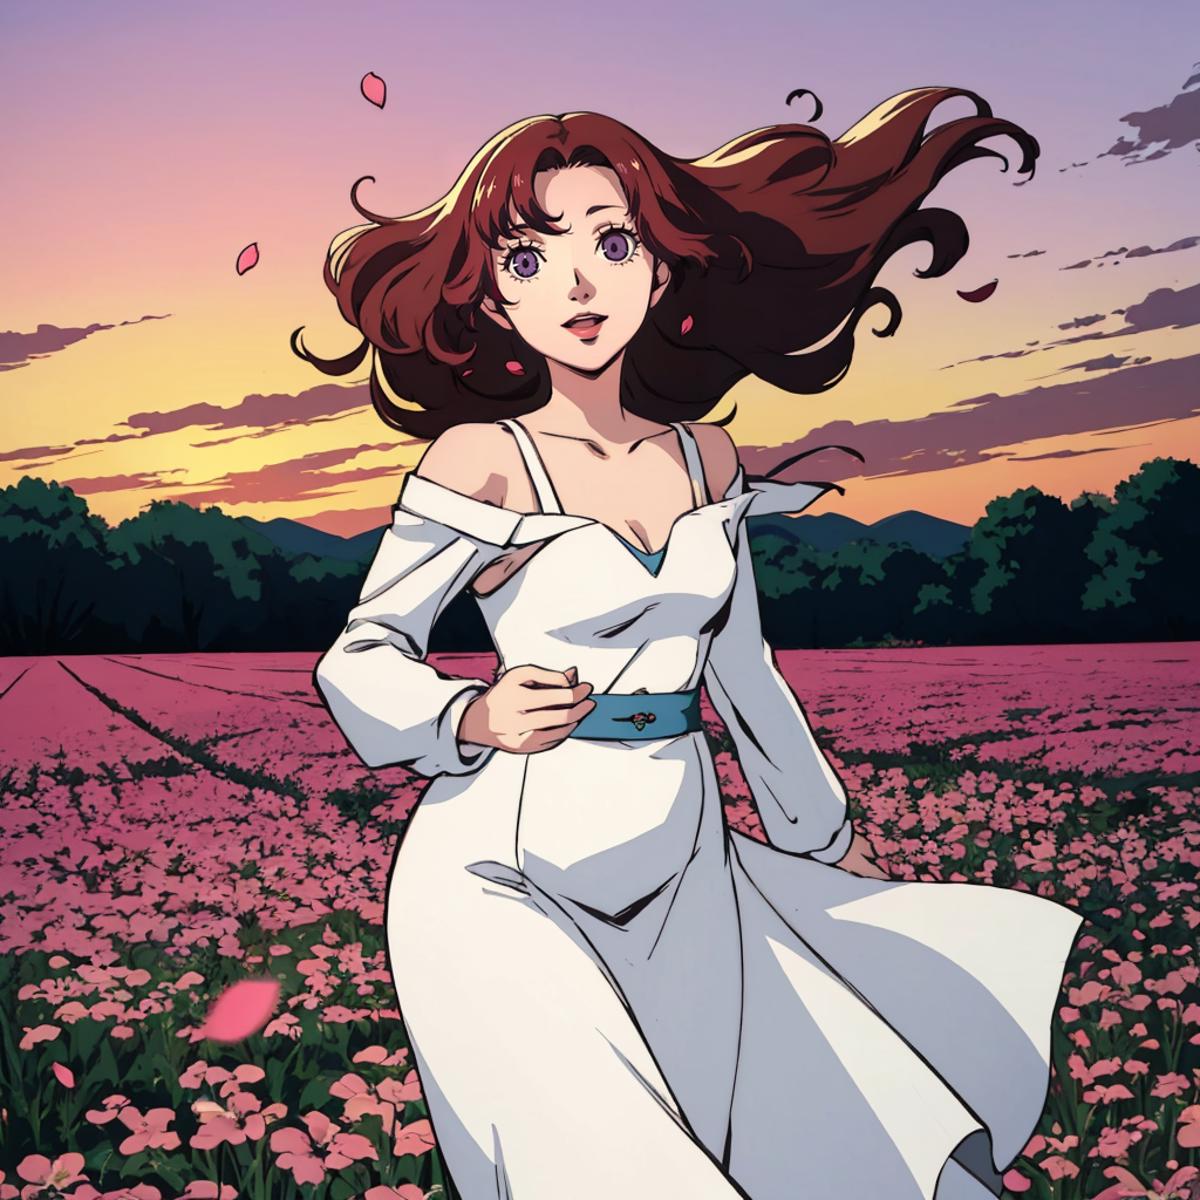 An anime character runs through a field of pink flowers.